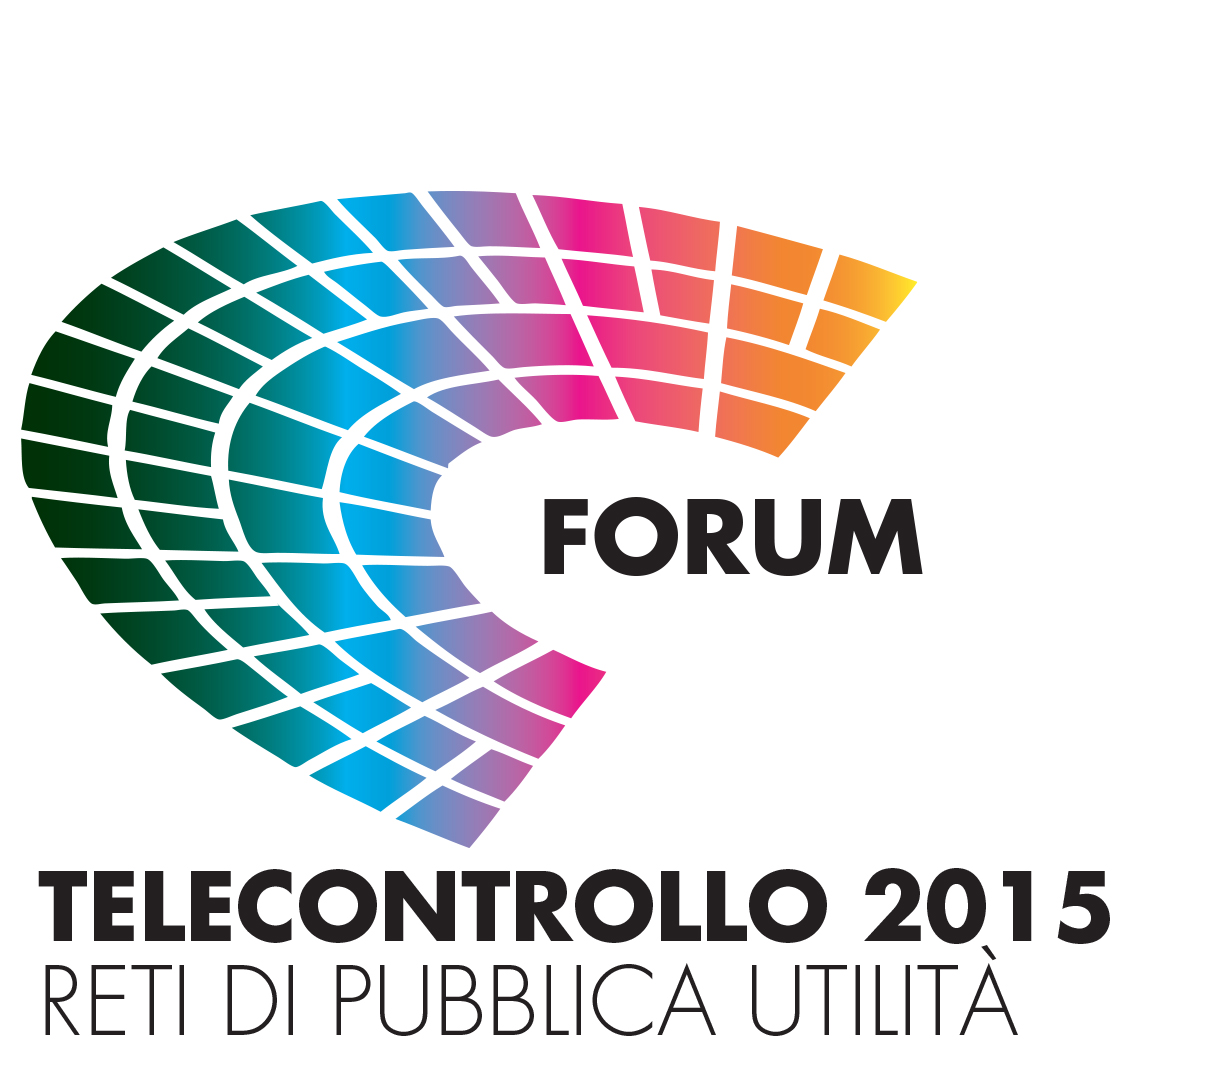 Forum Telecontrollo 2015